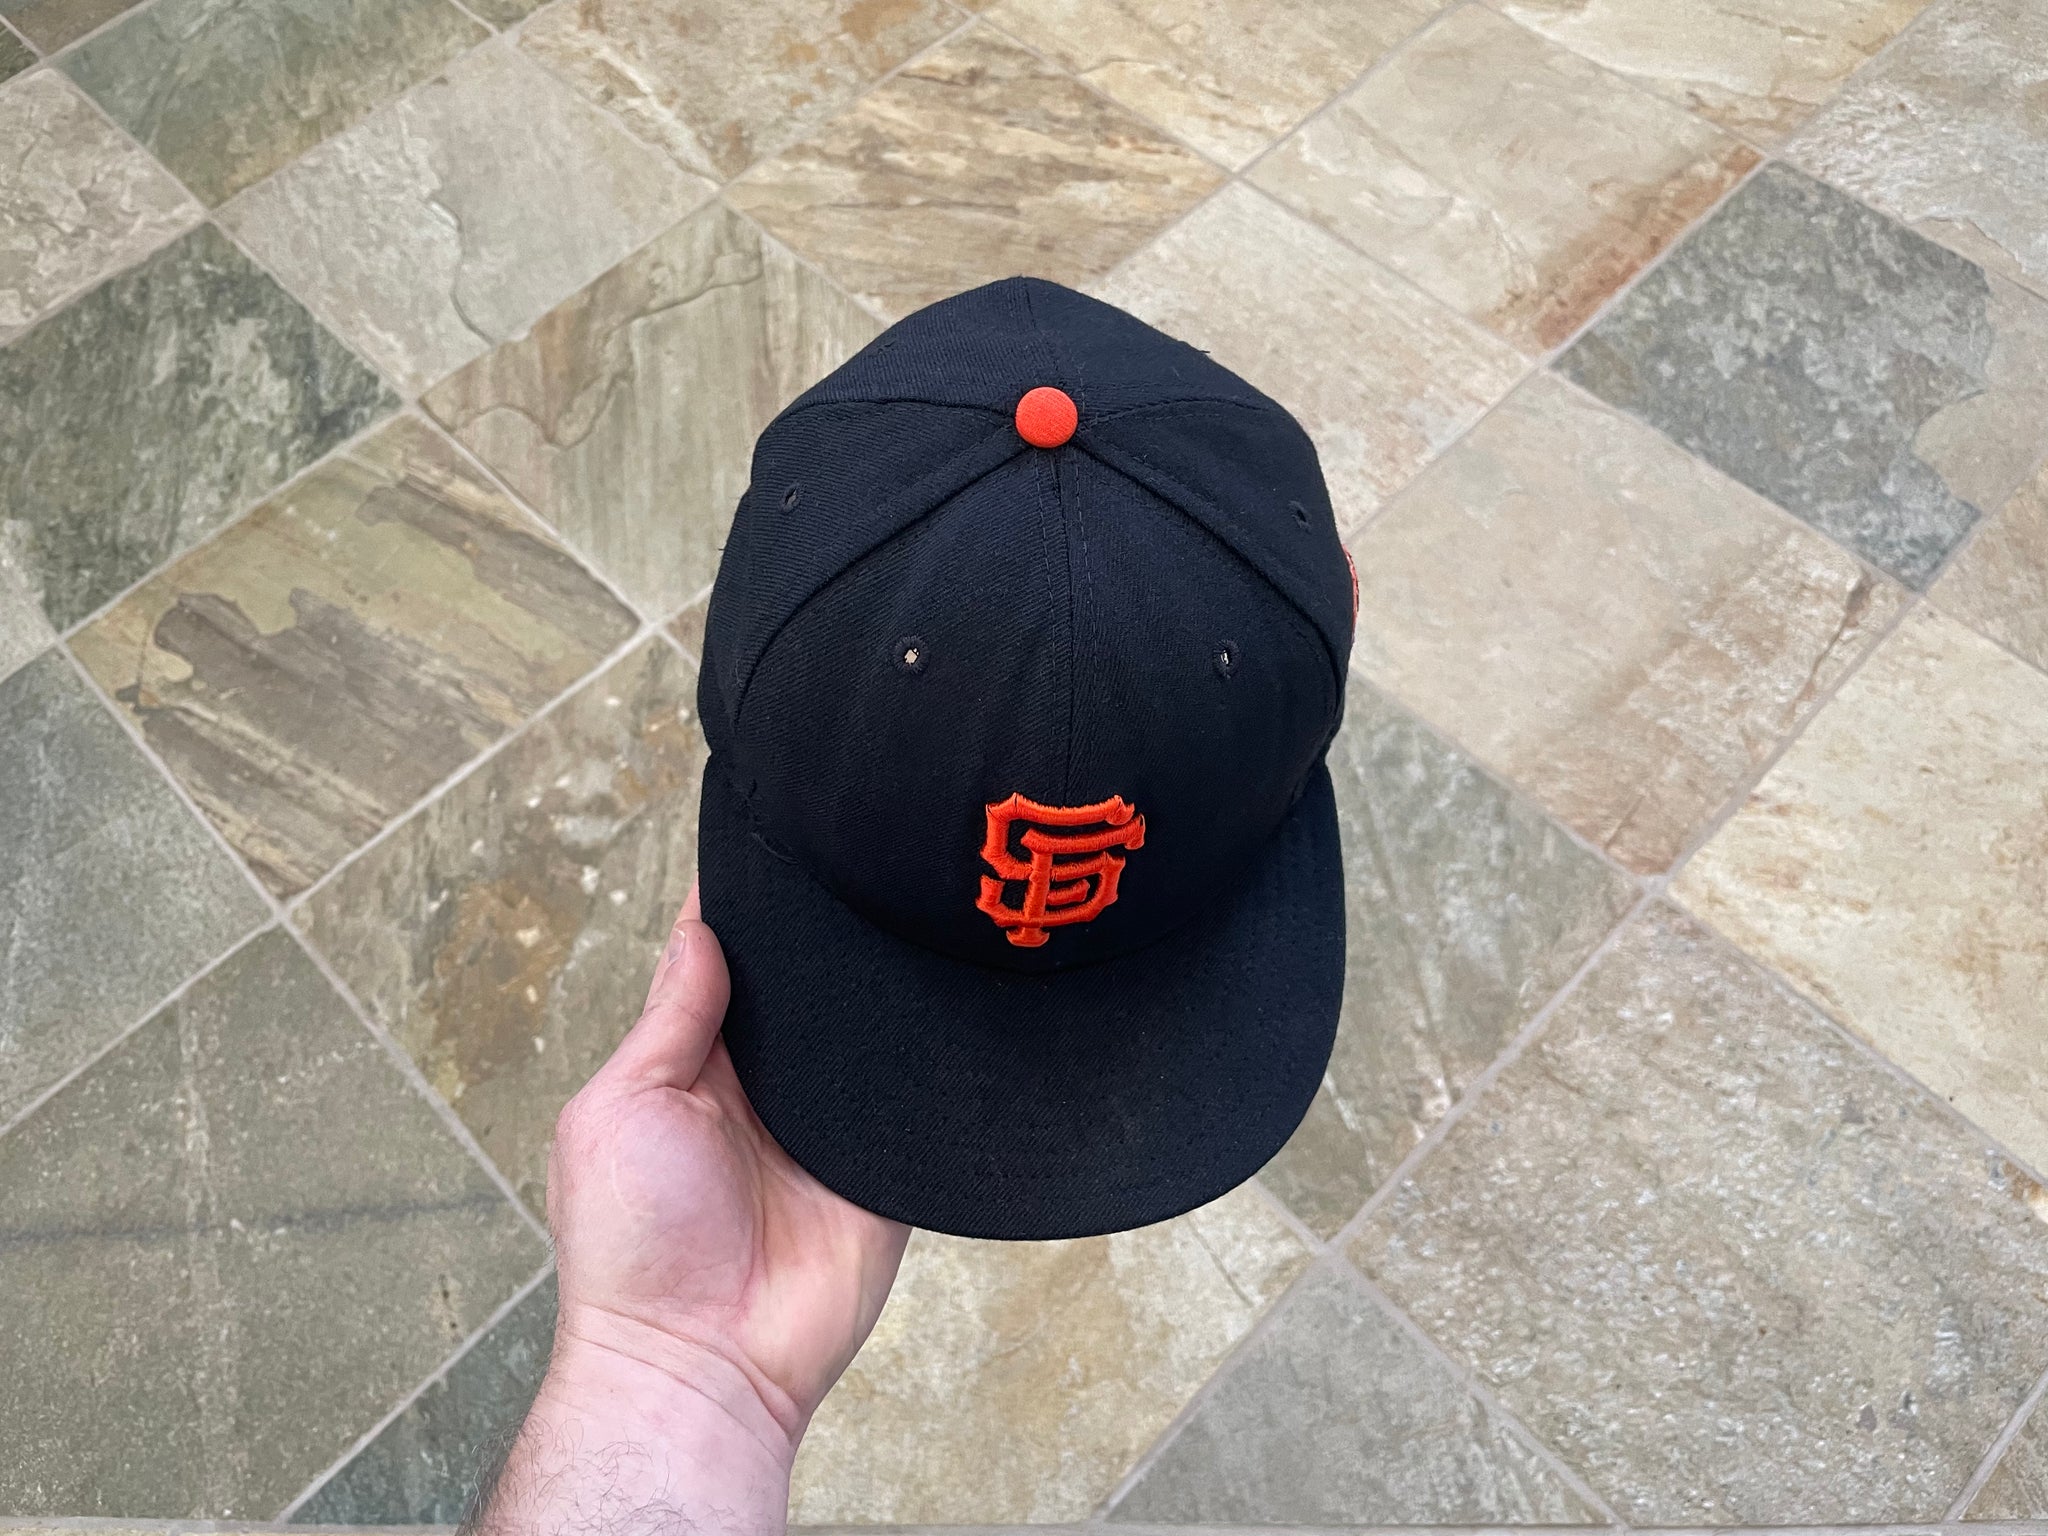 Vintage San Francisco Giants New Era Pro Fitted Baseball Hat, Size